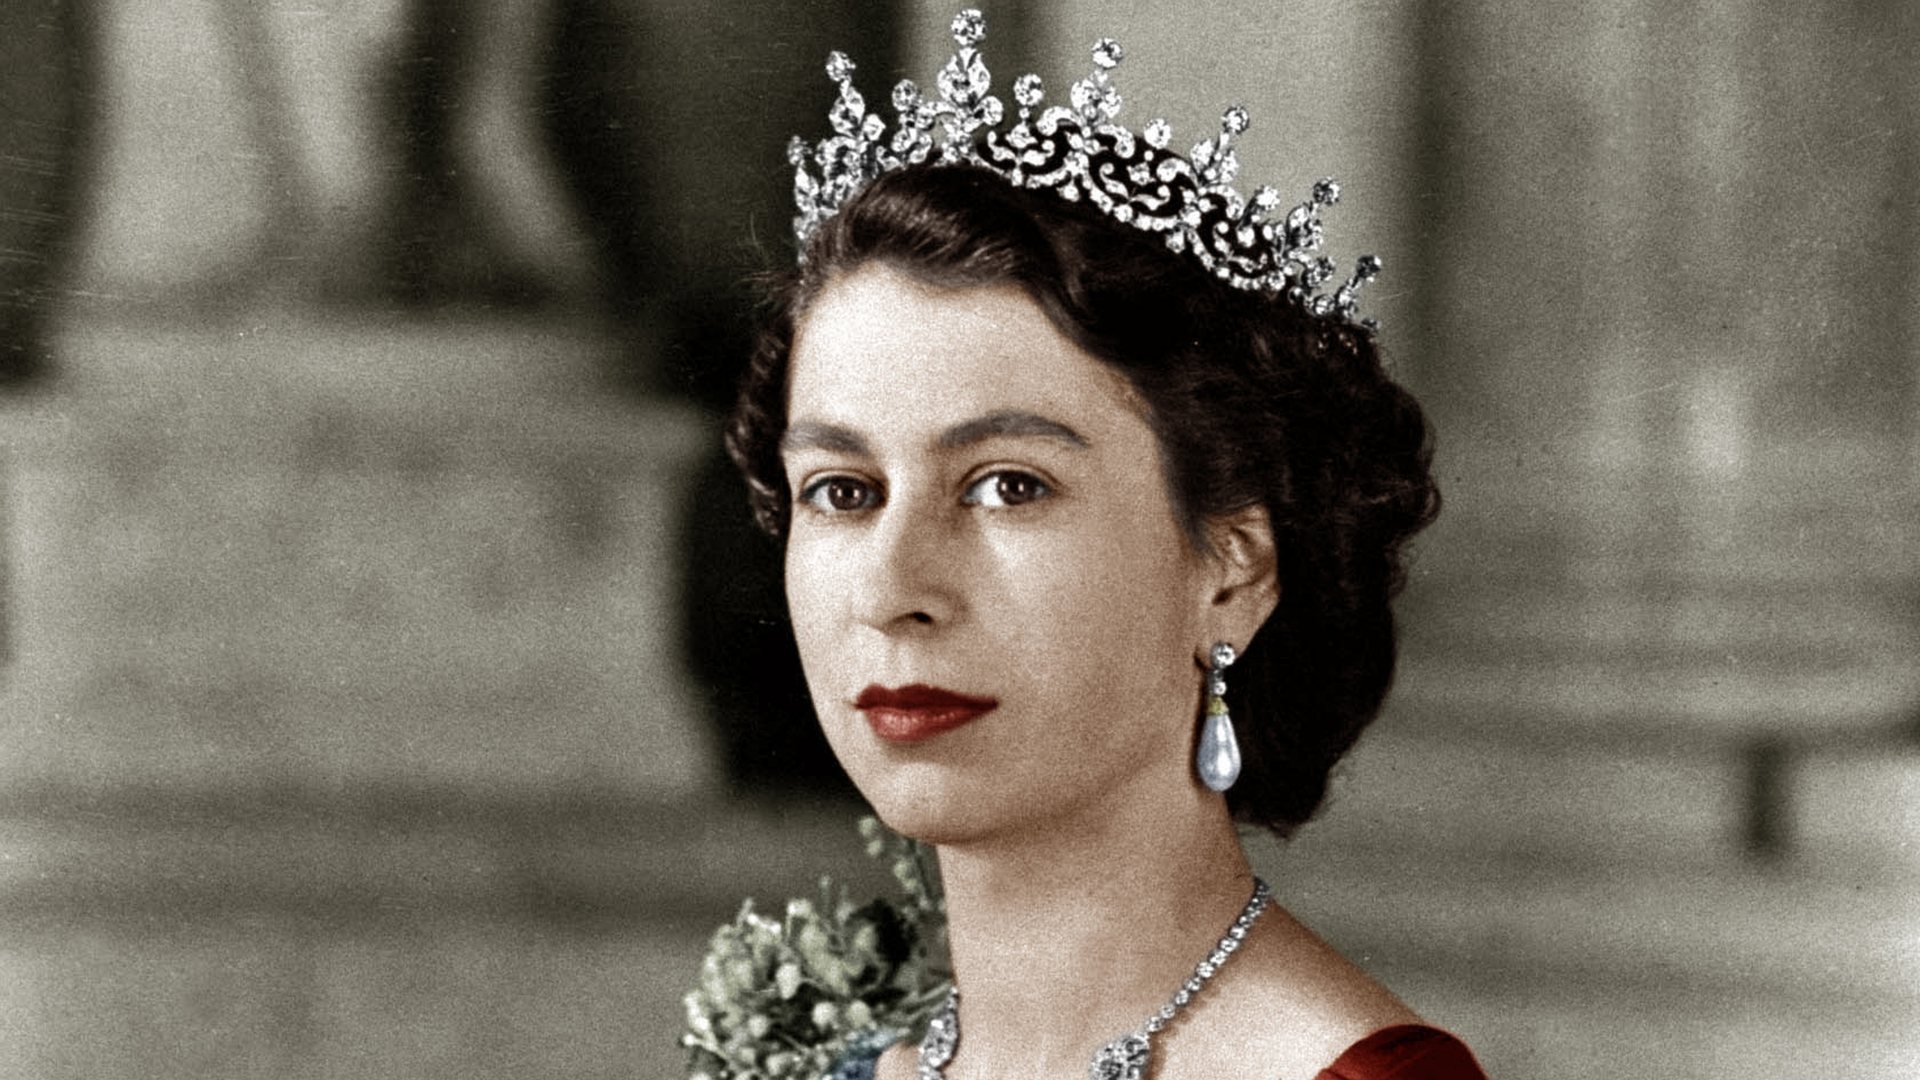 King George VI dies; Elizabeth becomes queen, February 6, 1952